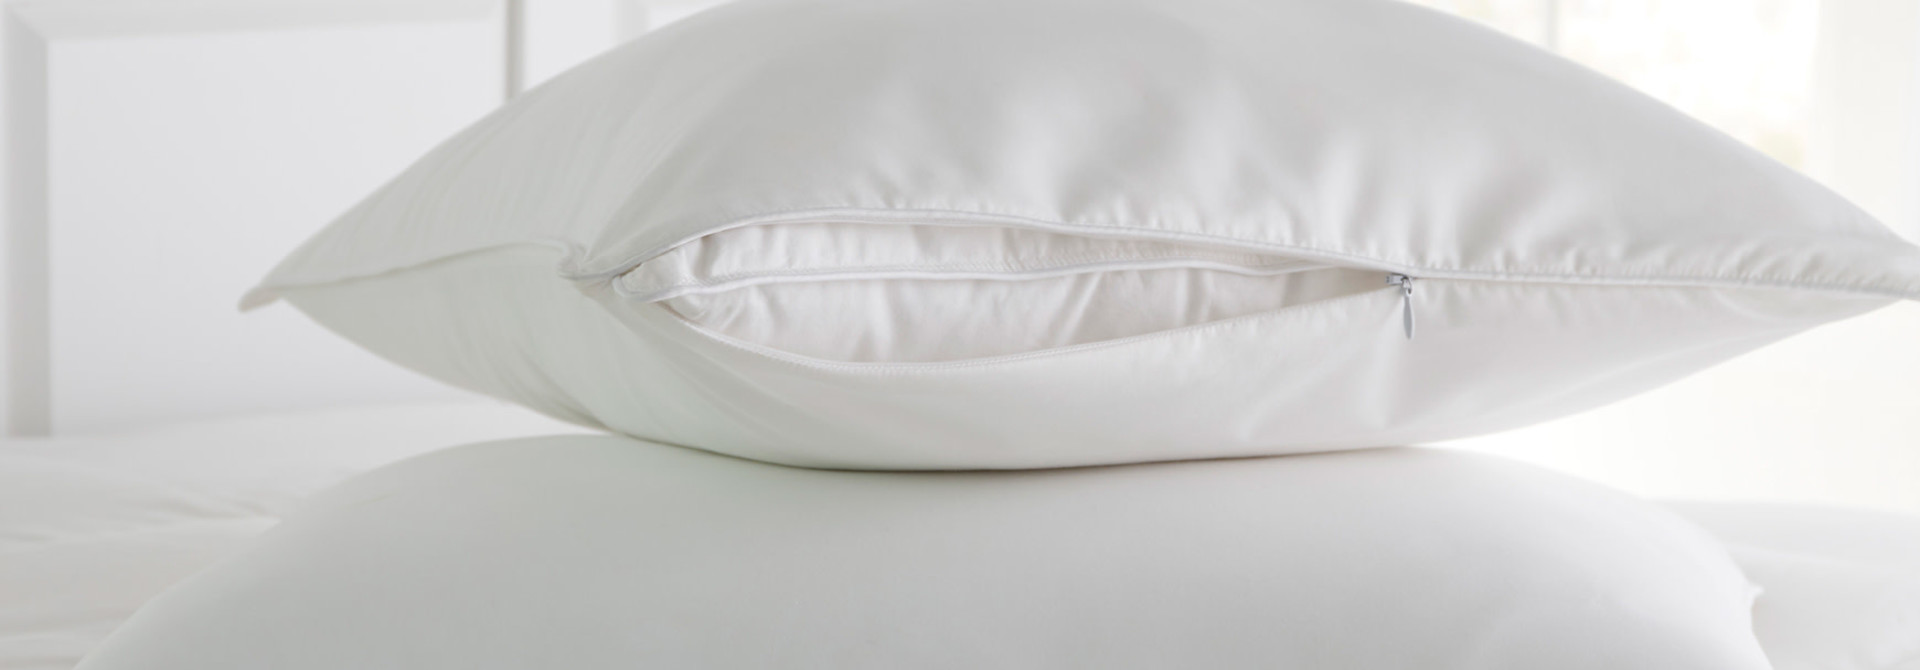 Basics | The Peacock Alley Pillow Protector Collection